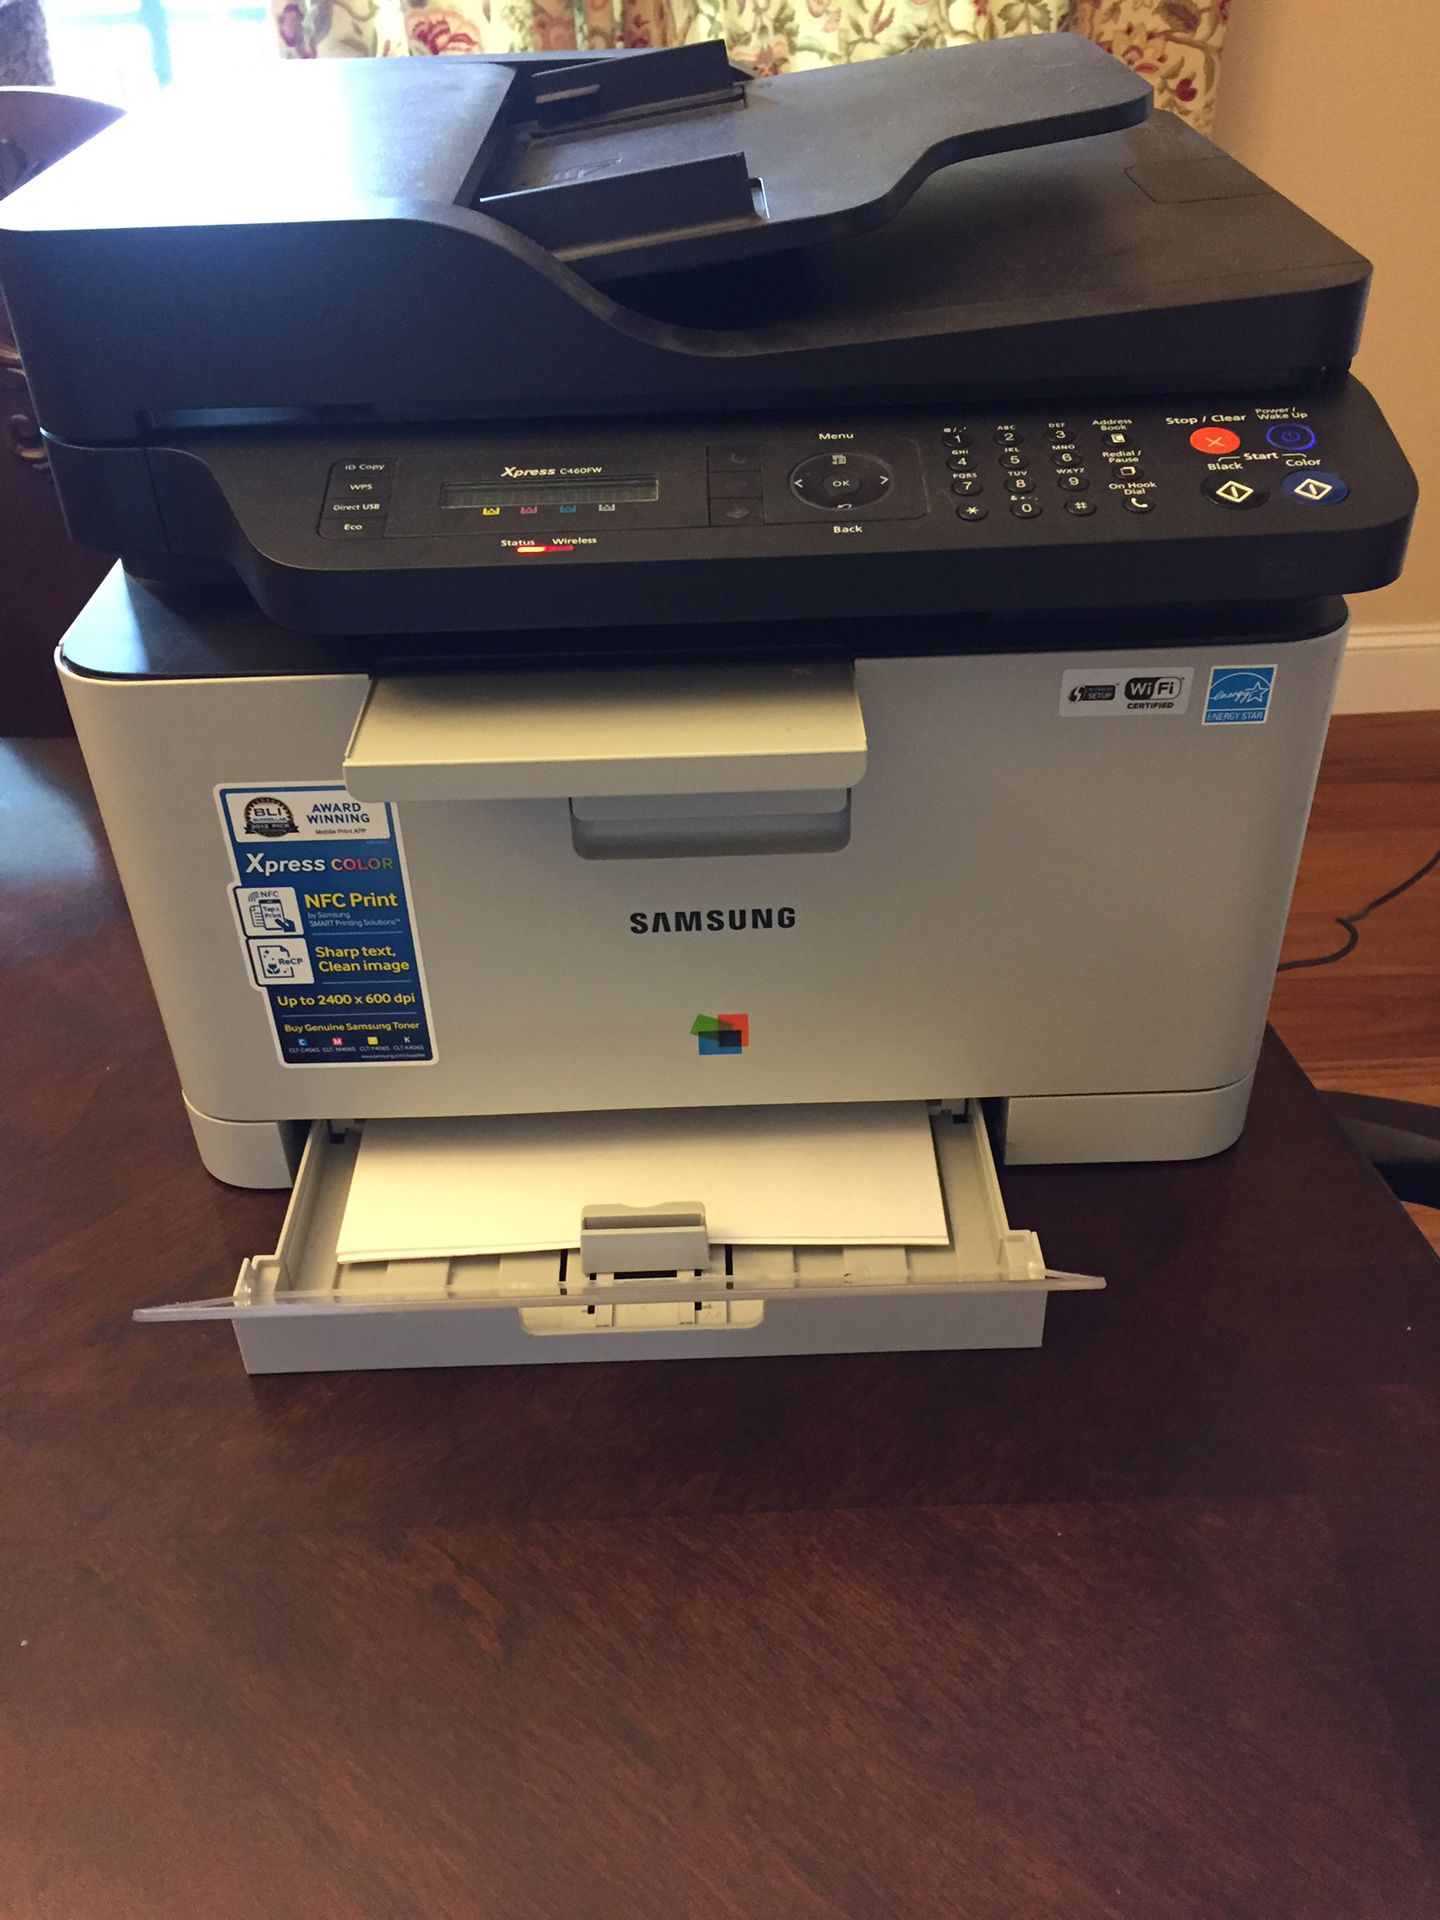 Samsung office printer